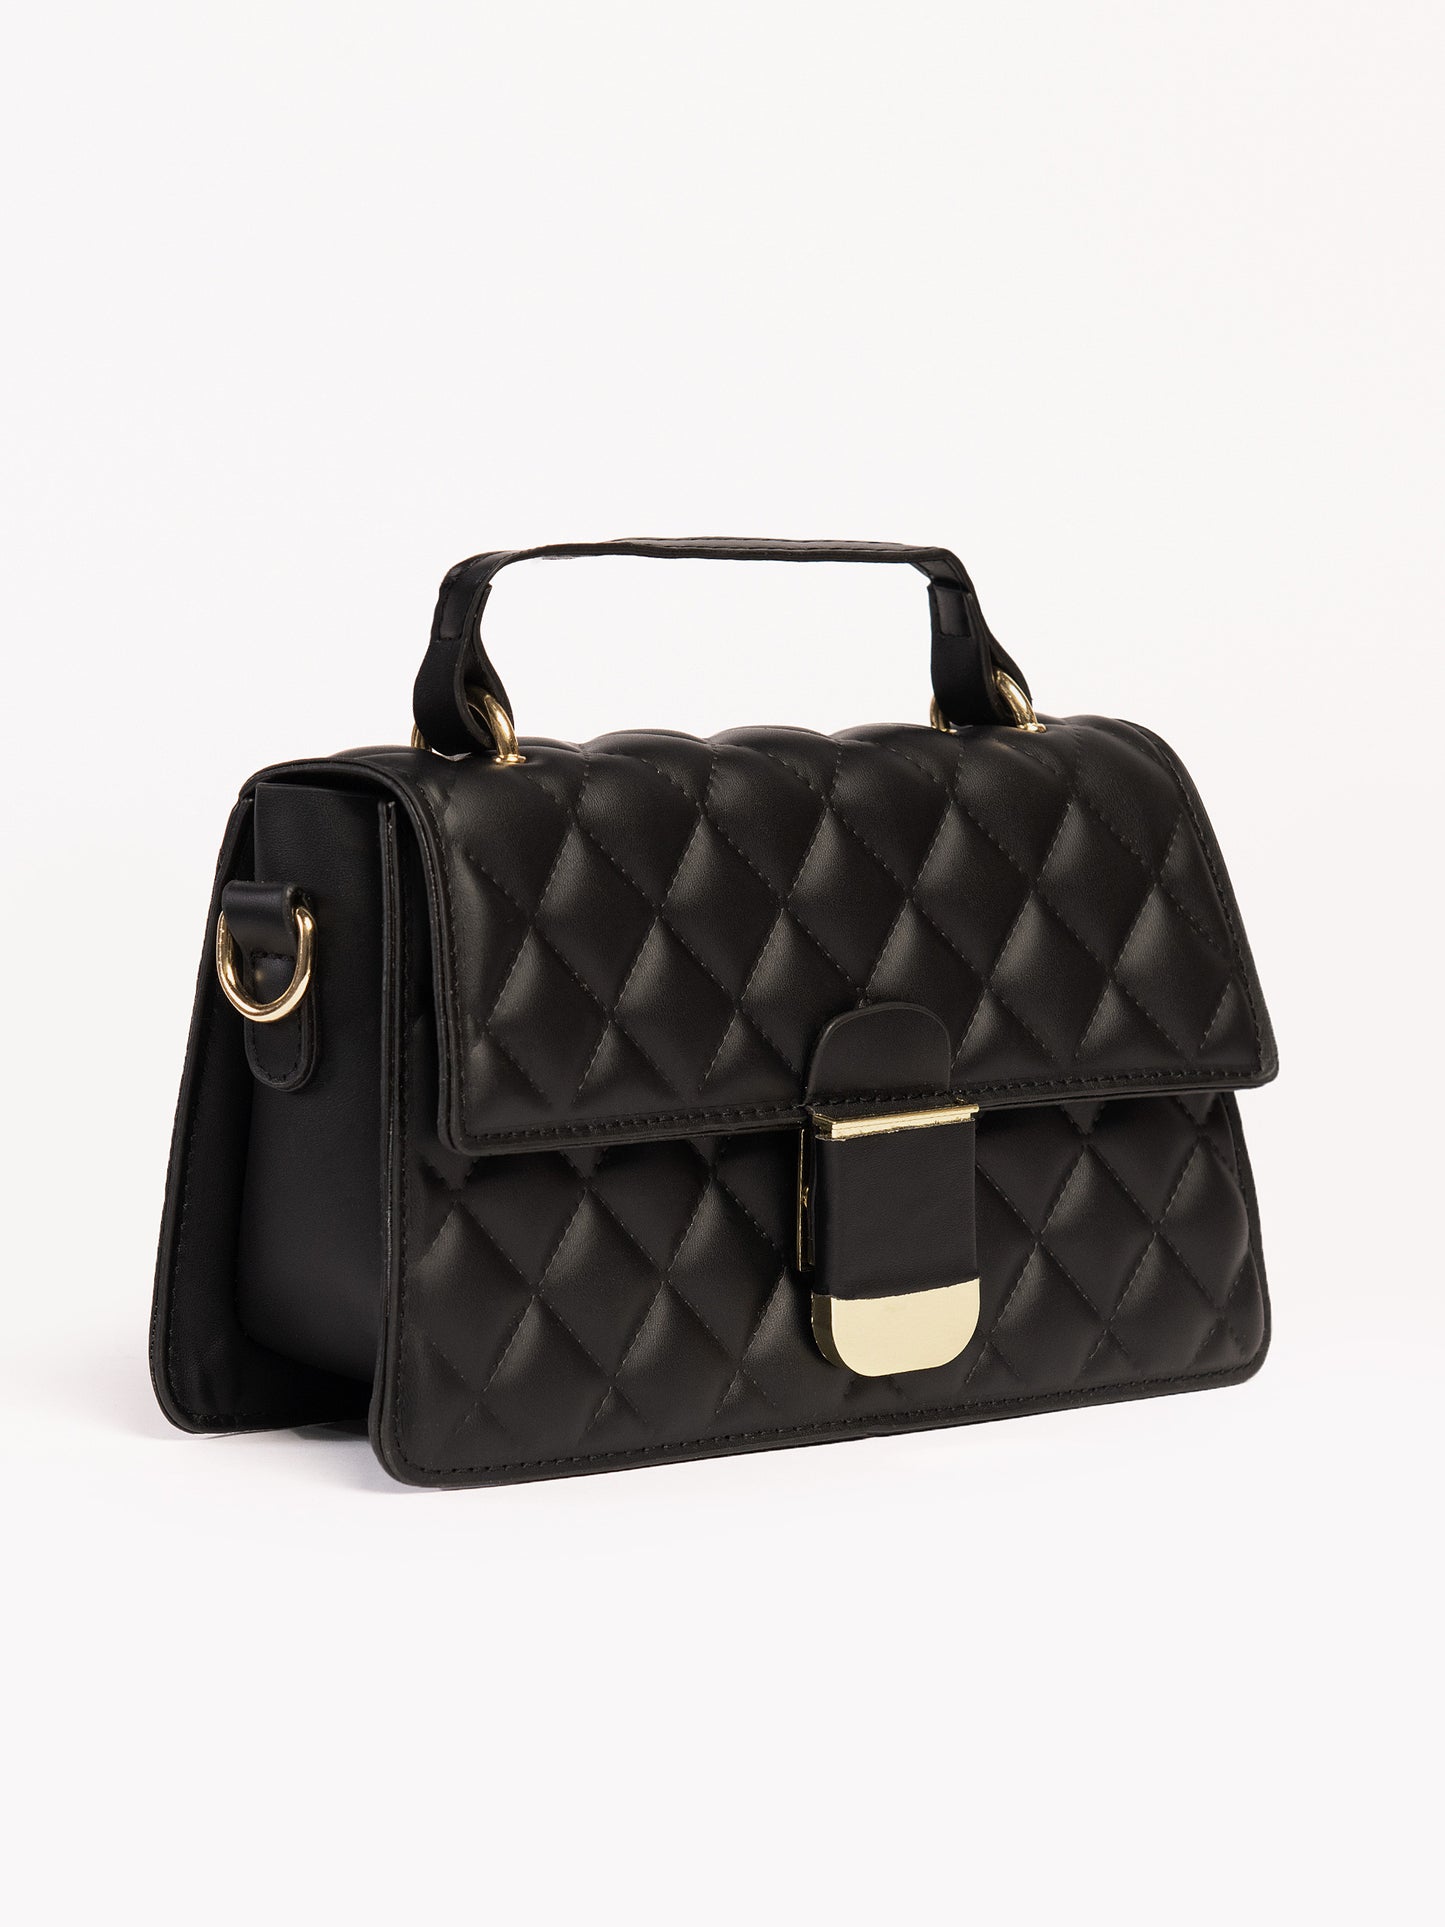 Criss-Cross Box Style Handbag